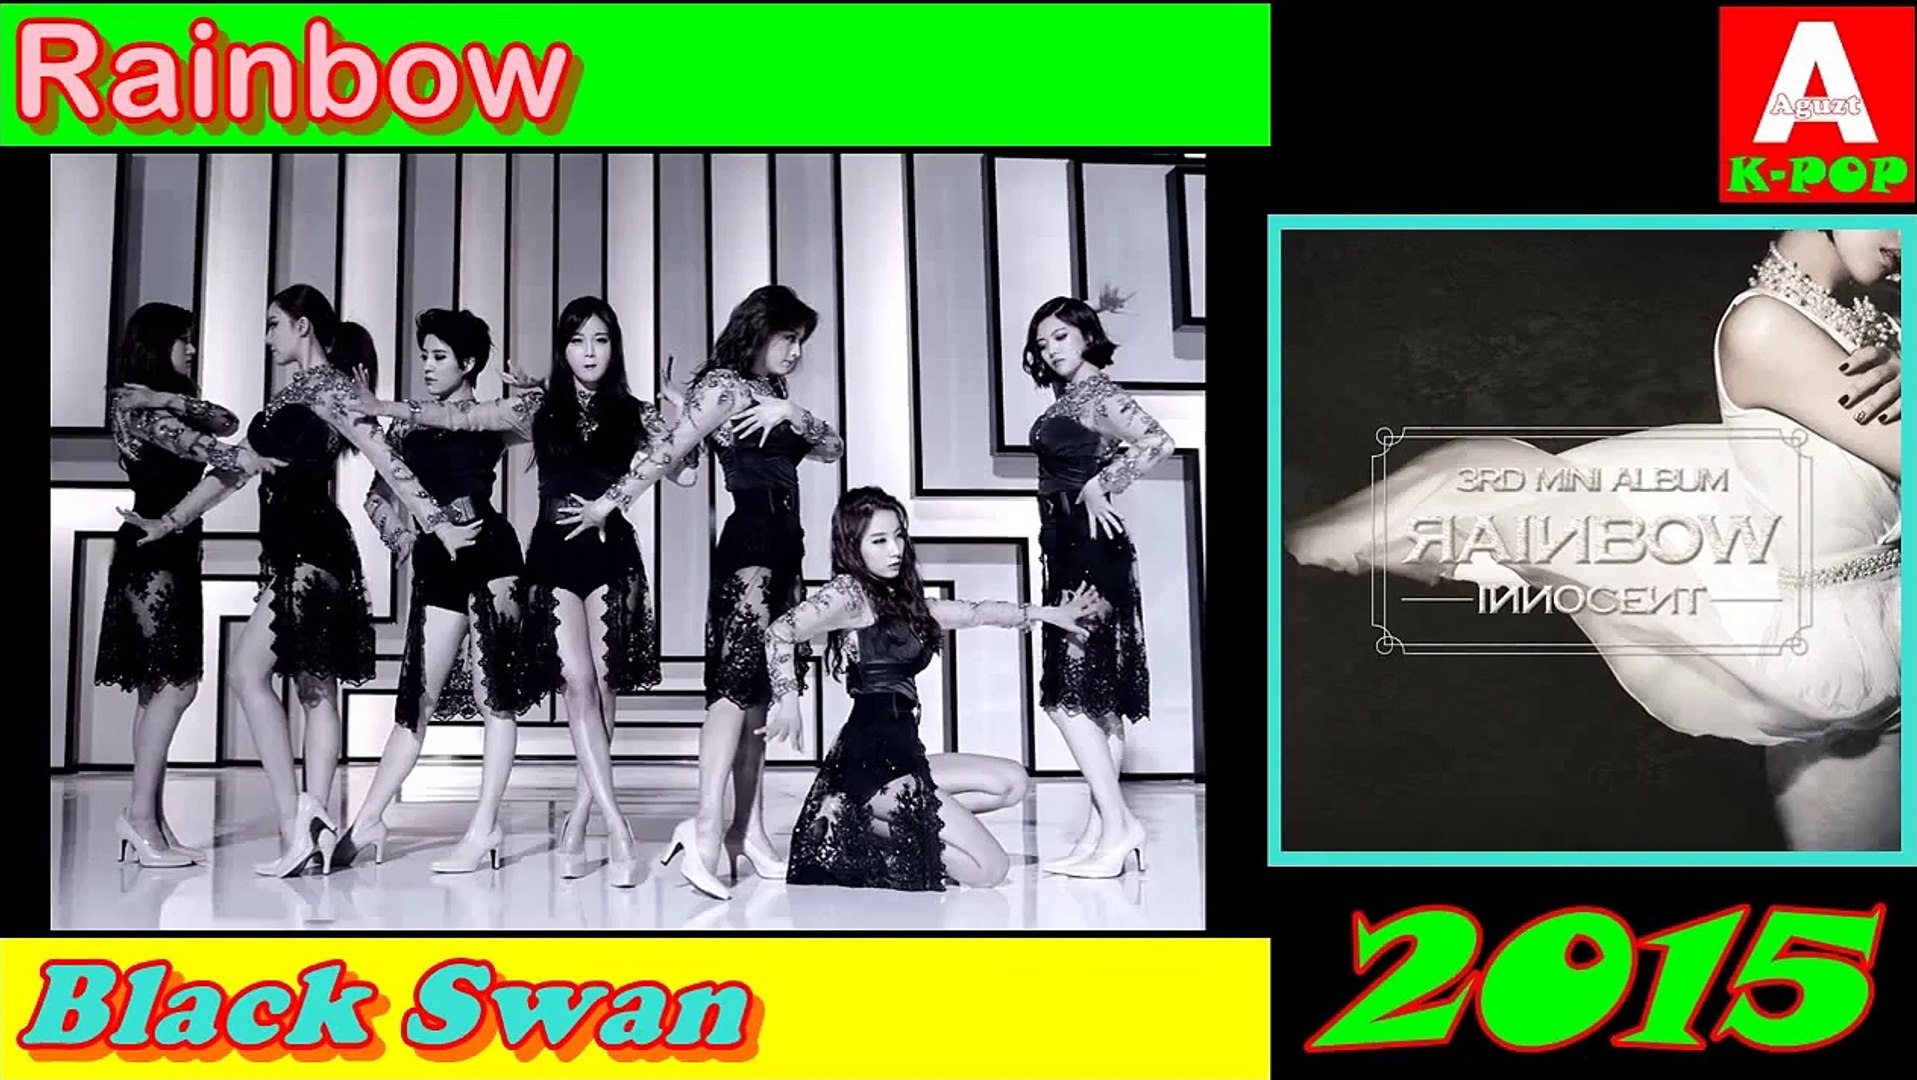 [Audio Kpop] Rainbow - Black Swan